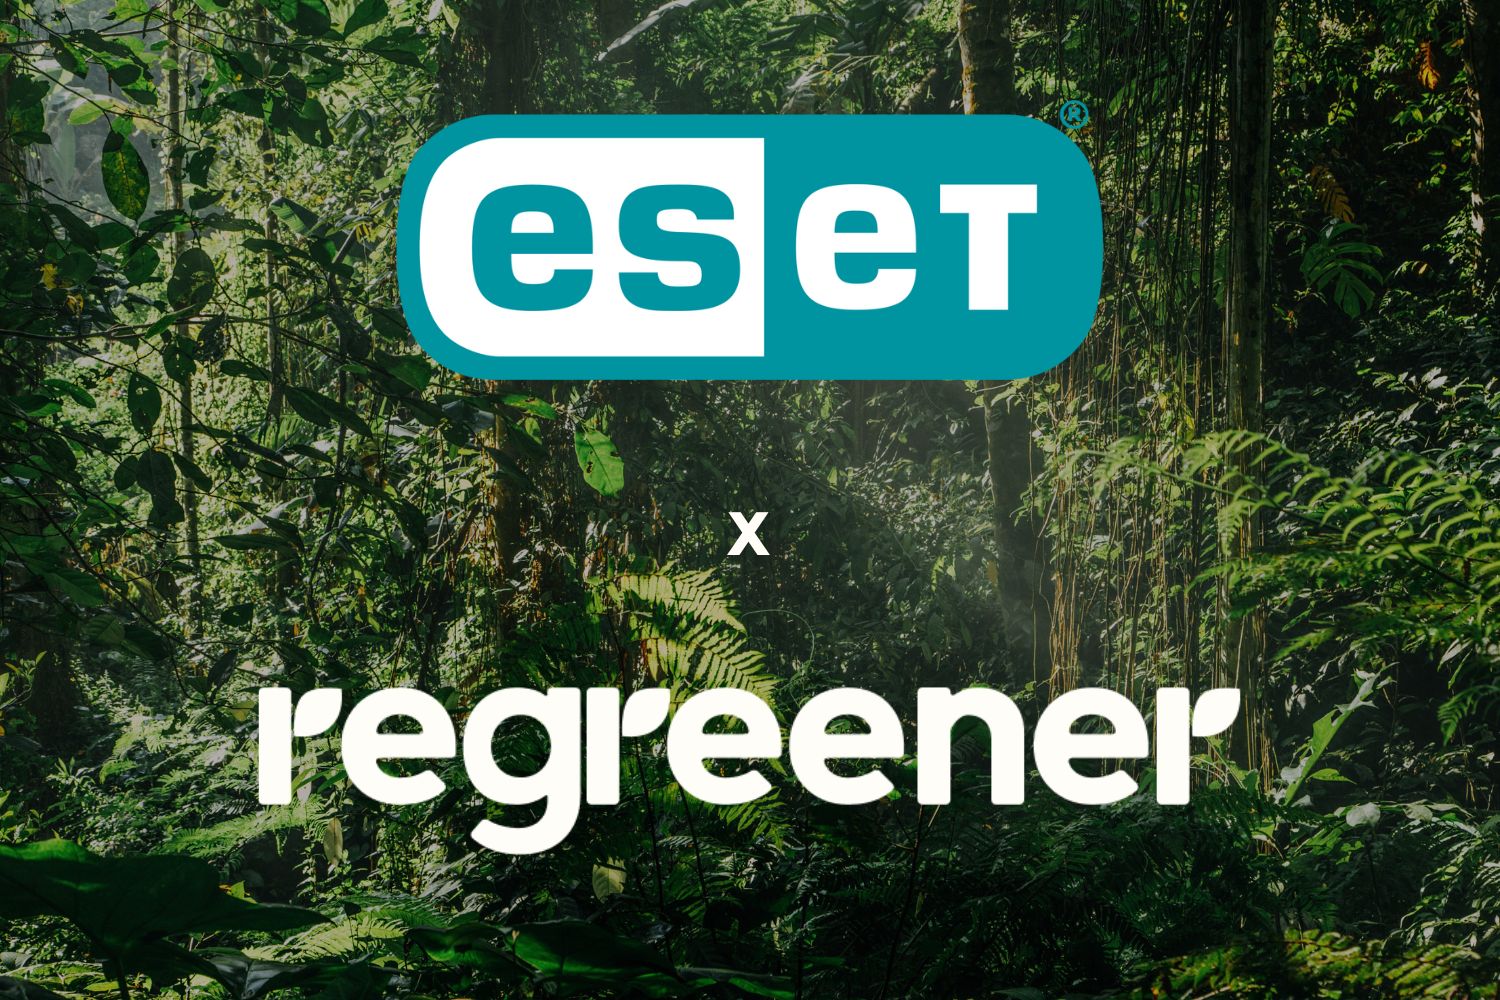 ESET in partnership with Regreener